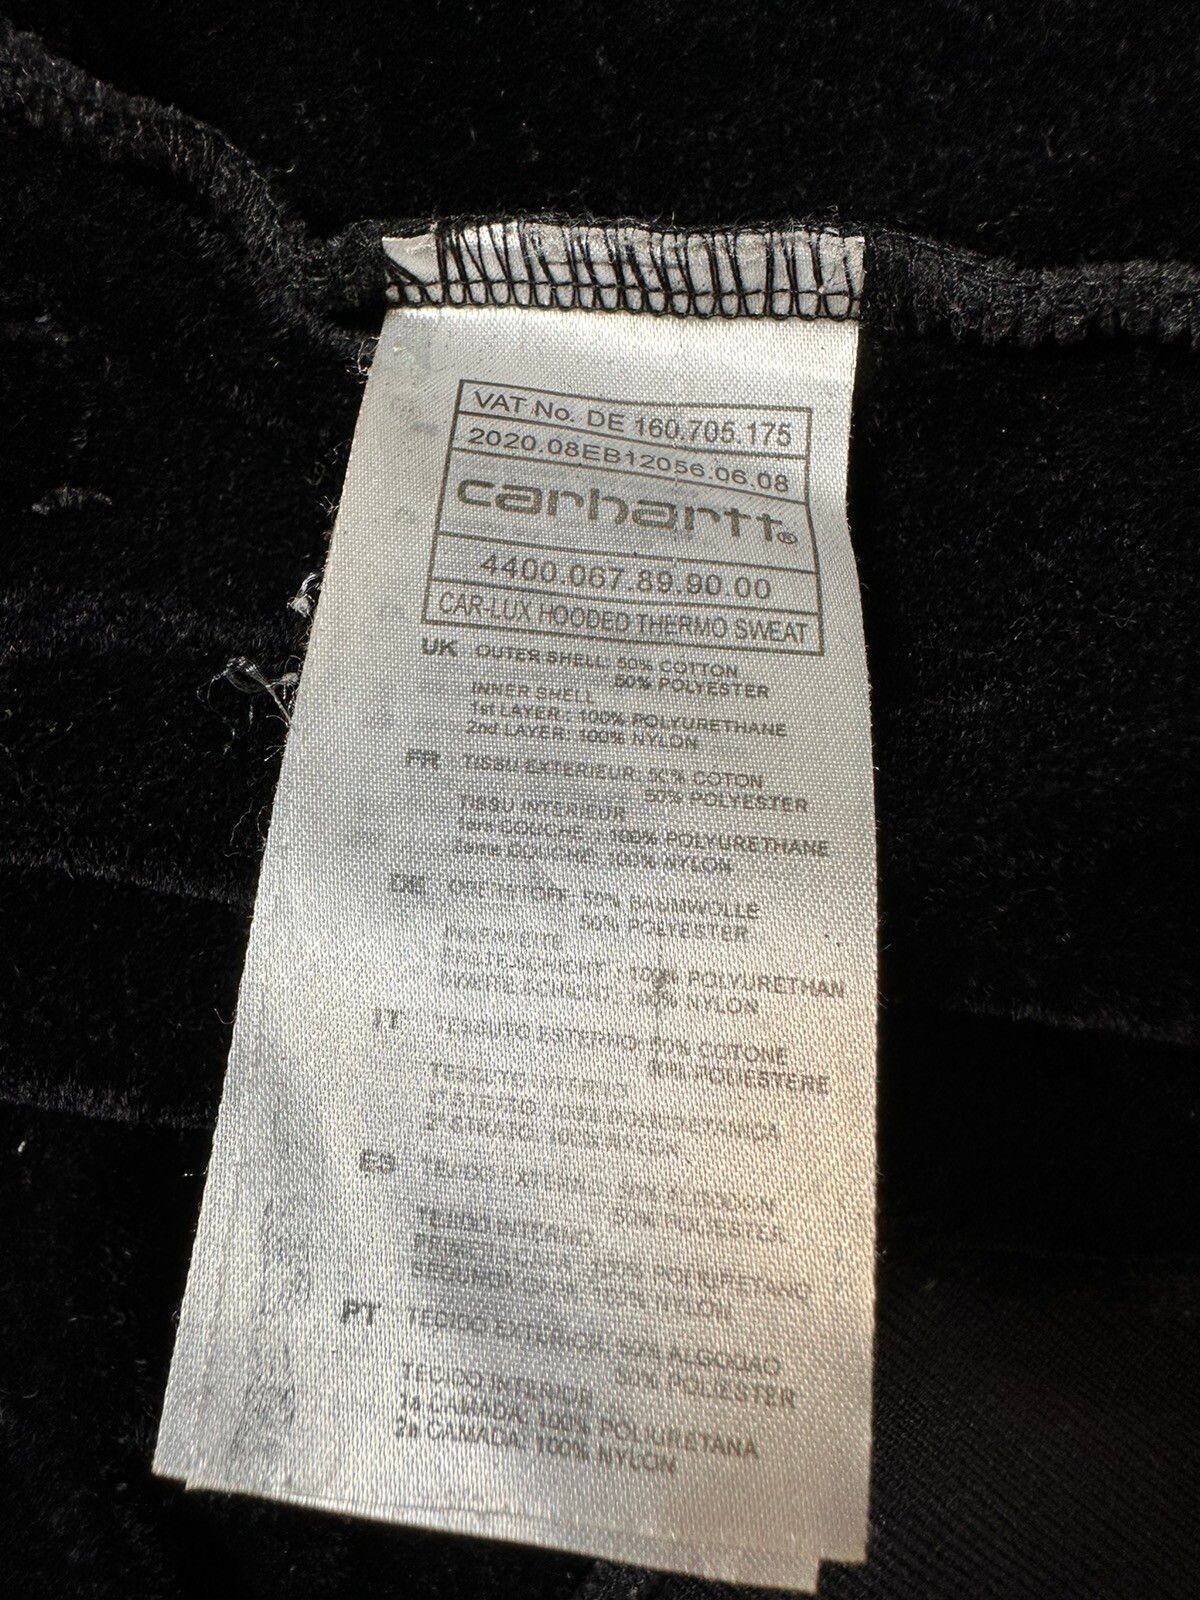 Vintage Mens Jacket Faded Carhartt Carlux Hooded Size L Size US L / EU 52-54 / 3 - 8 Thumbnail